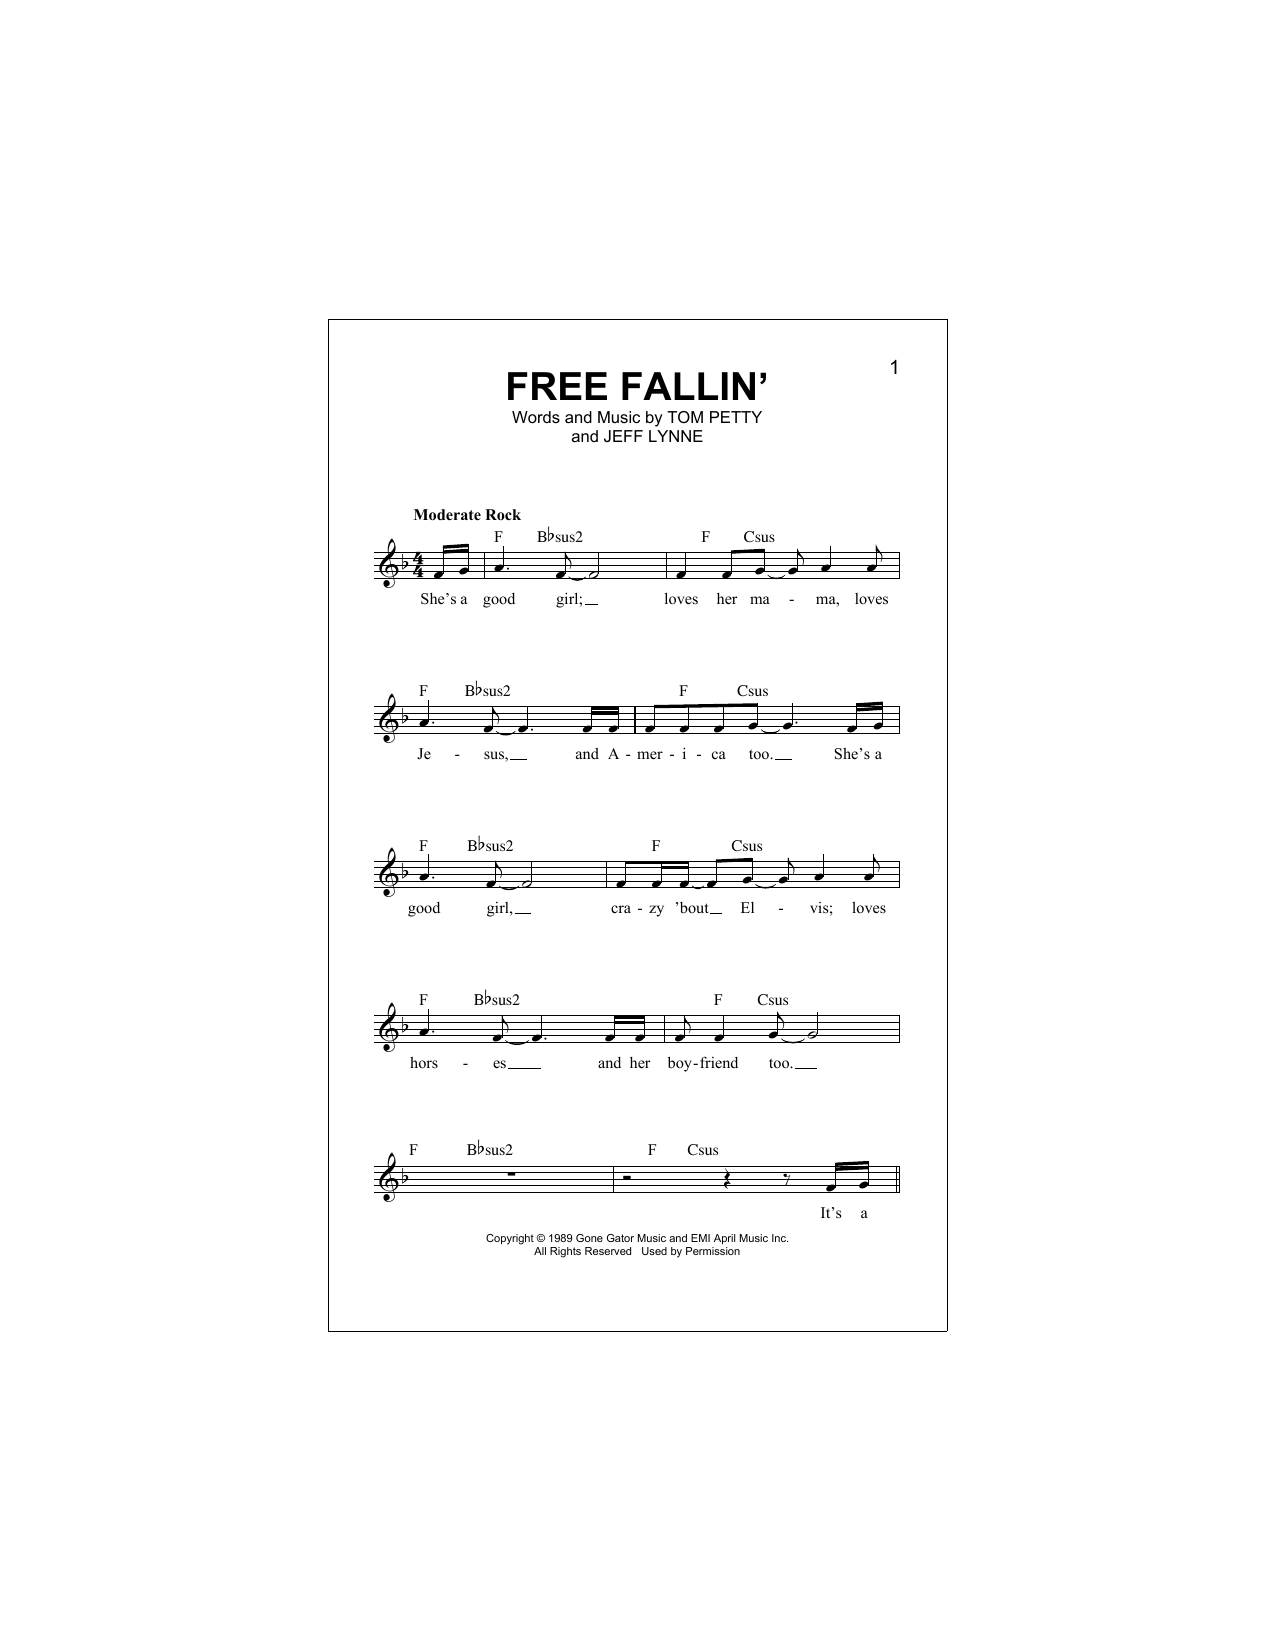 Download Tom Petty Free Fallin' Sheet Music